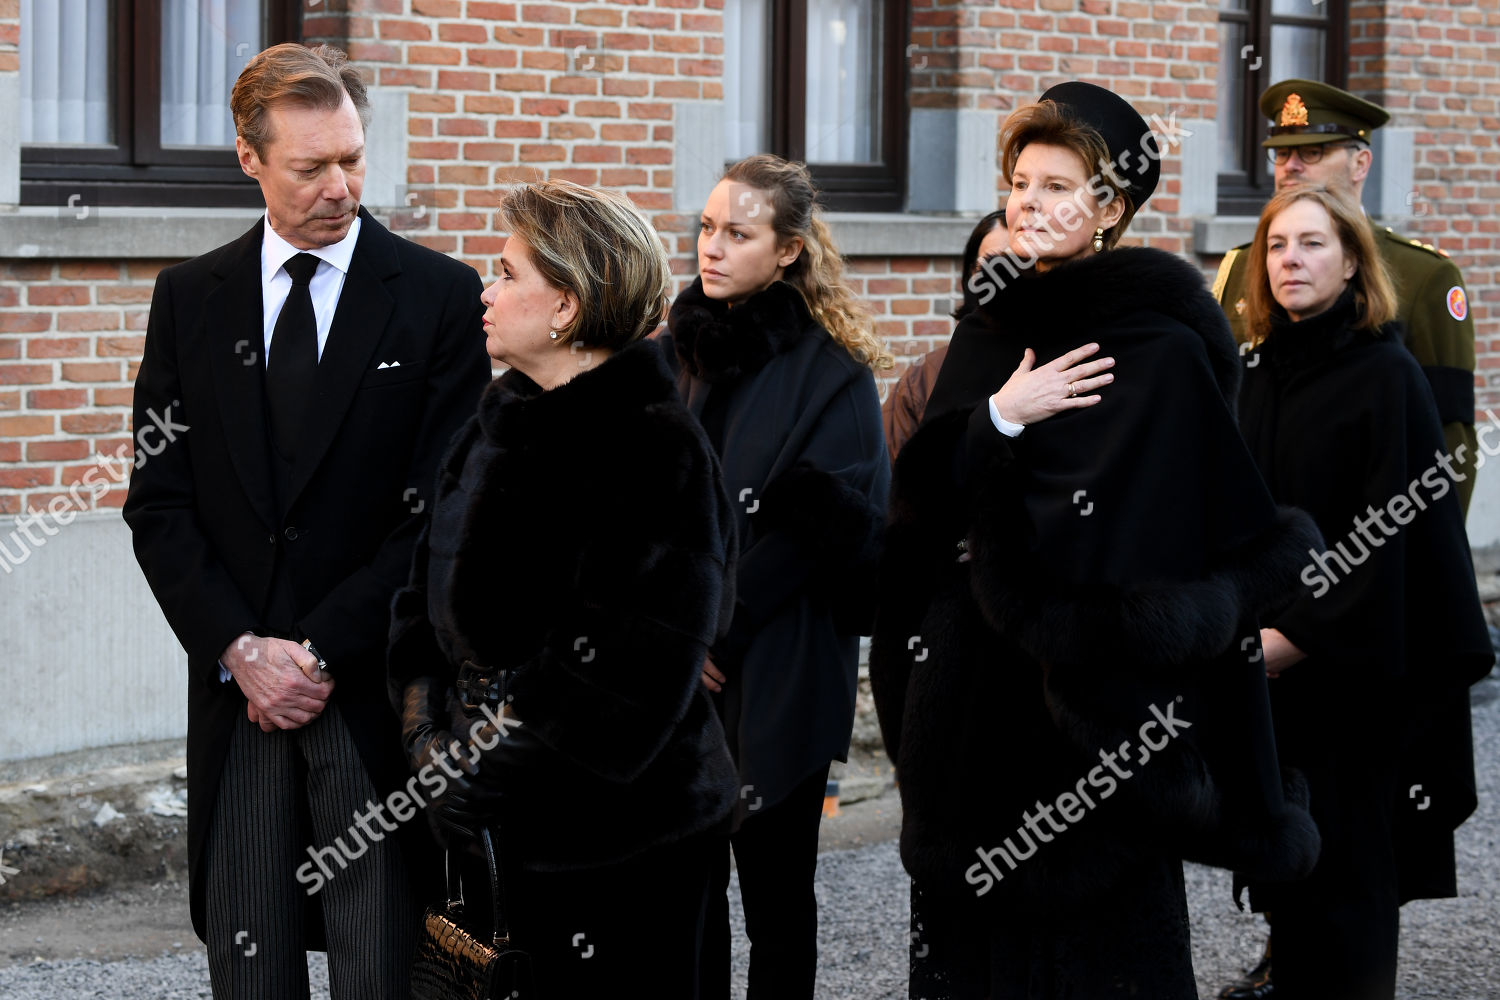 funeral-of-princess-alix-of-luxembourg-beloeil-belgium-shutterstock-editorial-10108462n.jpg